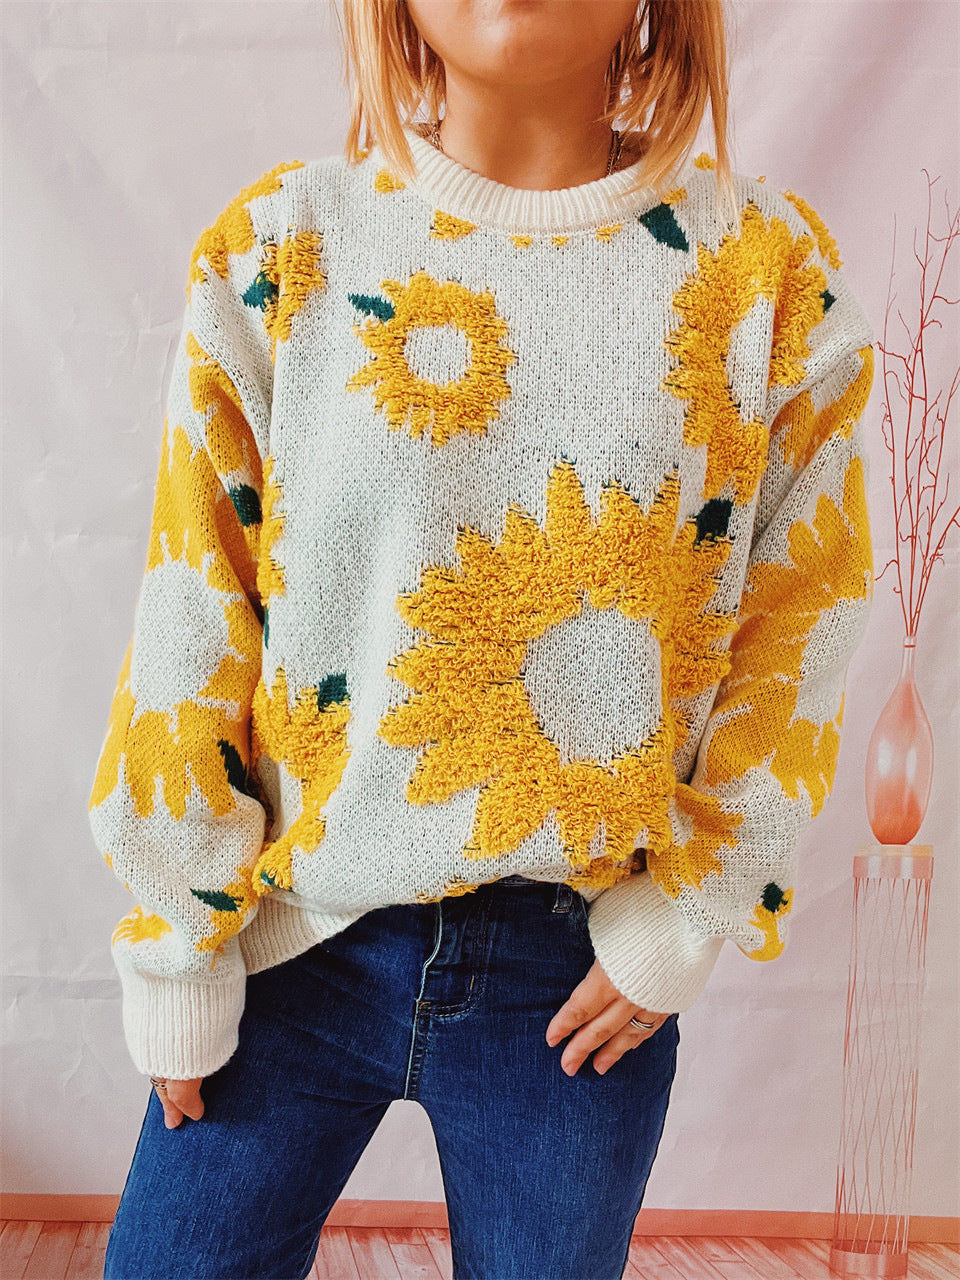 Women's Sunflower Jacquard Round Neck Long Sleeve Sweaters